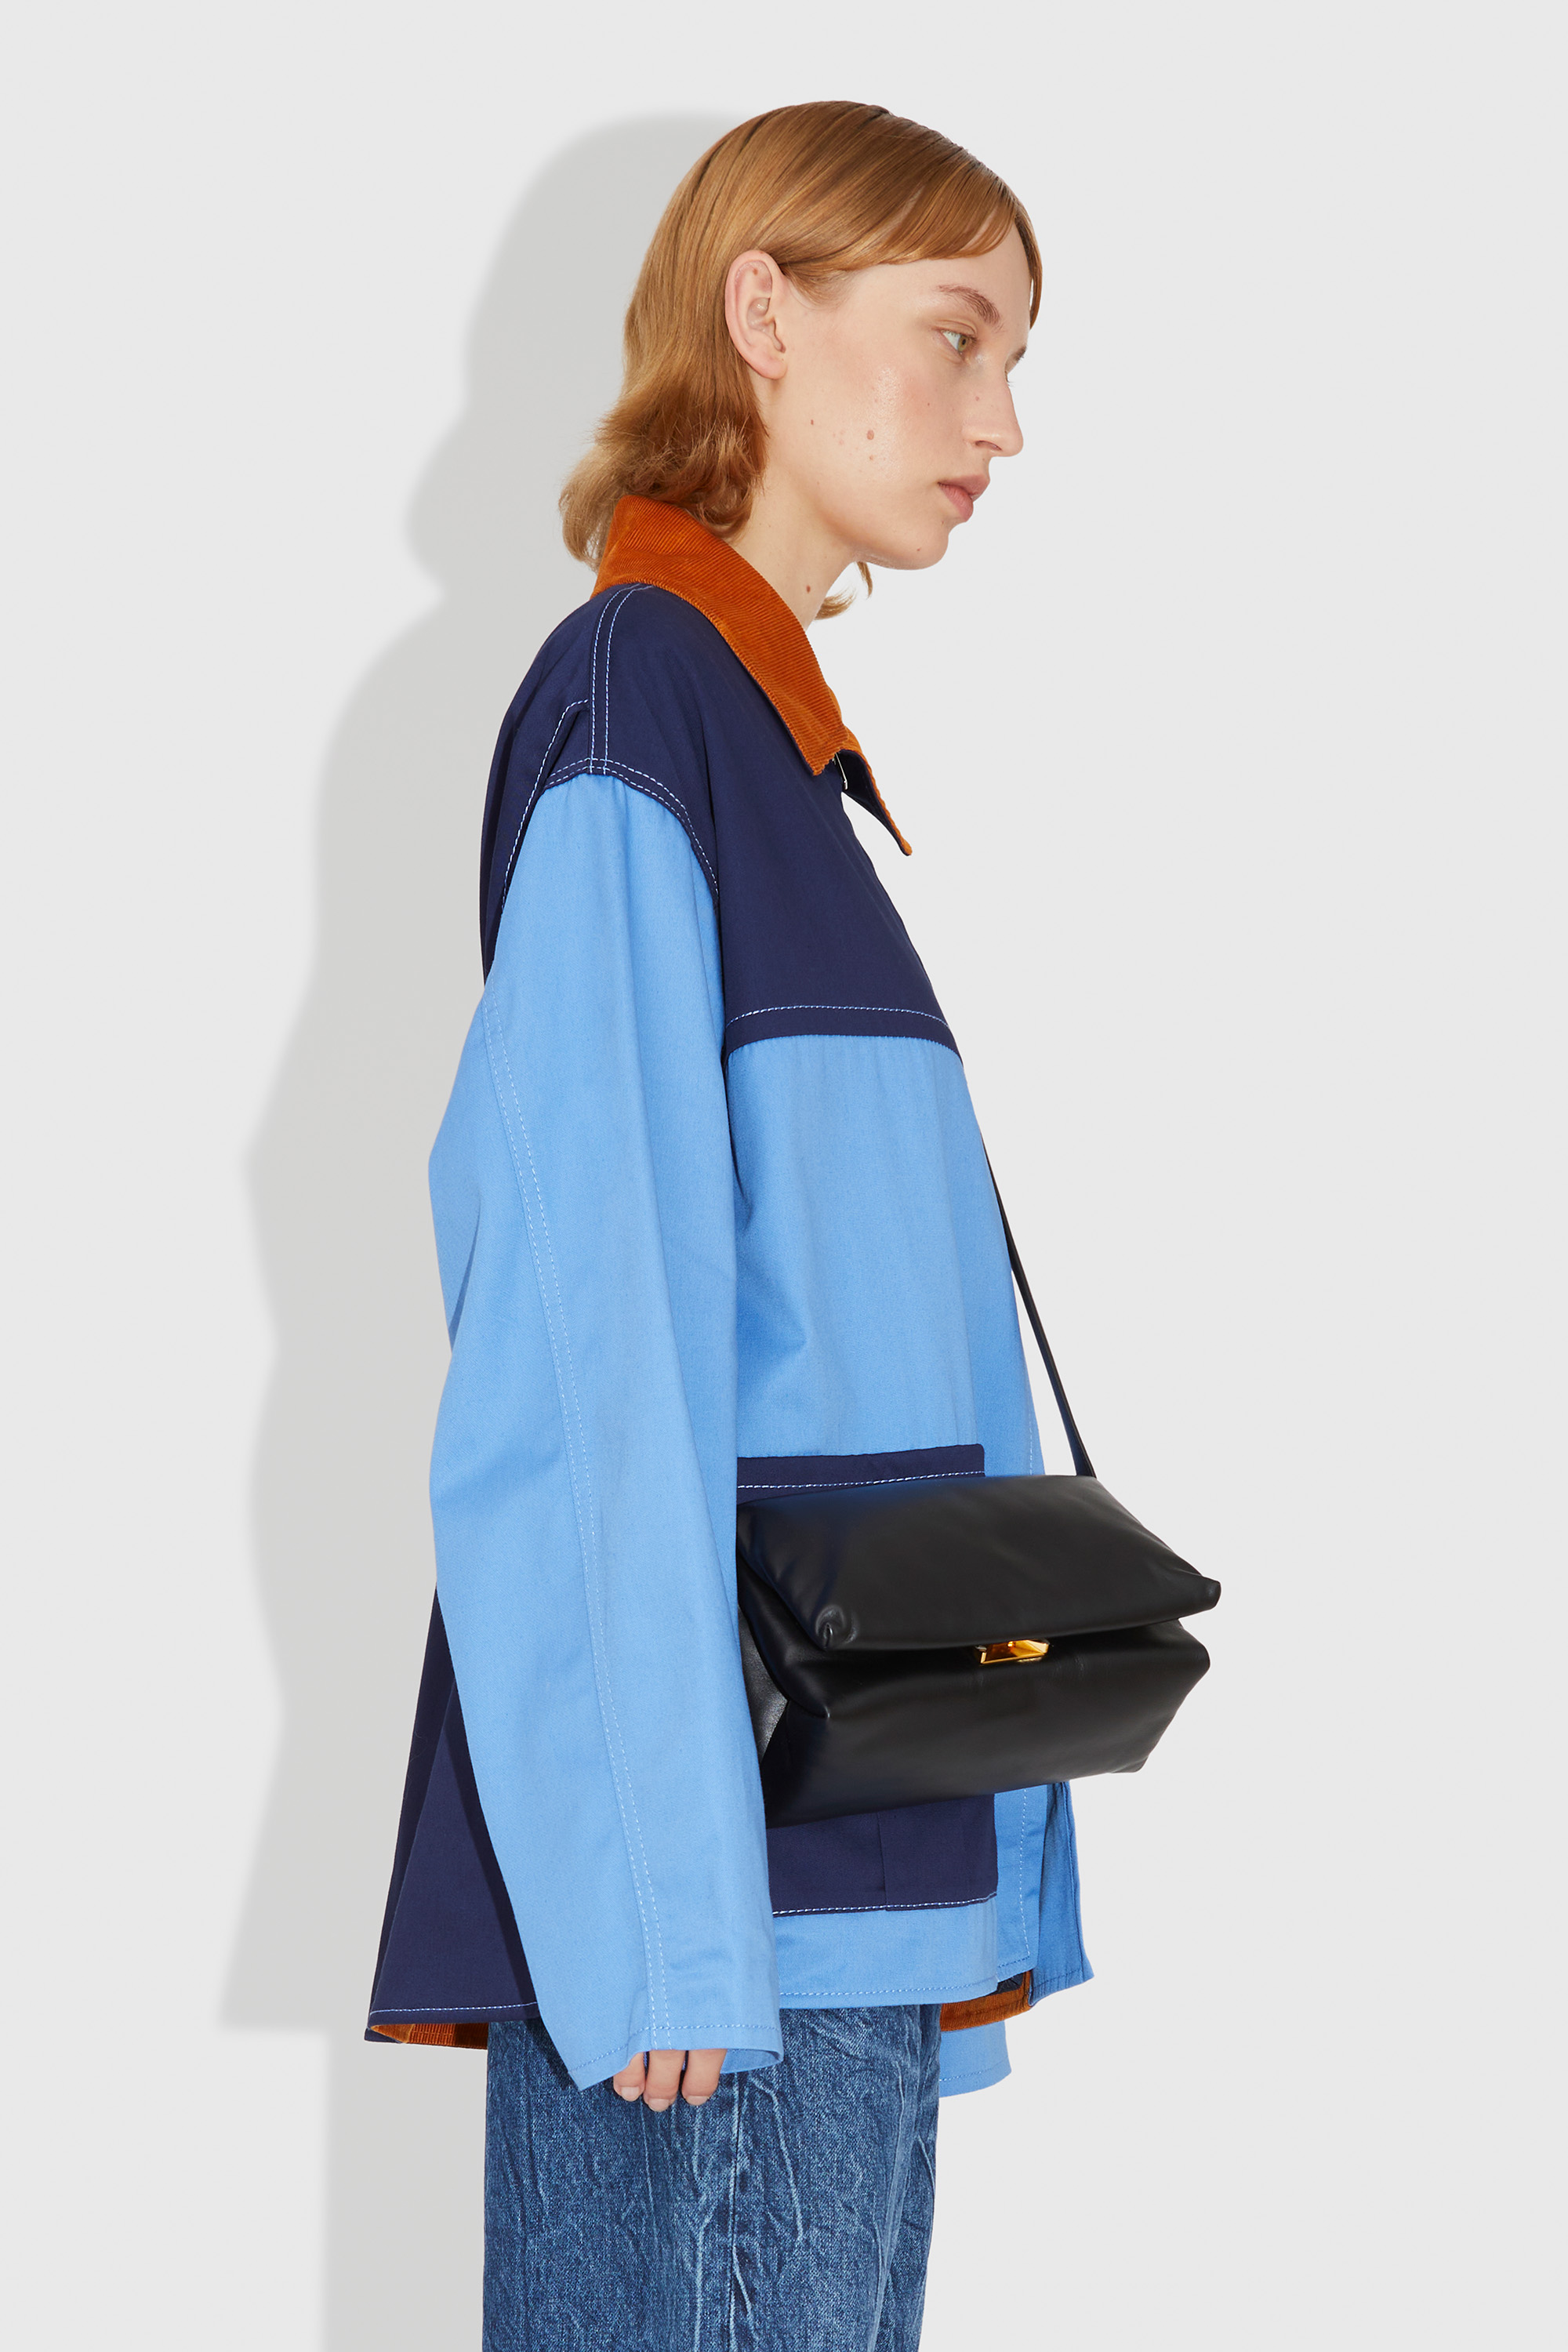 Stylish Marni x H&M Unisex Tote Bag